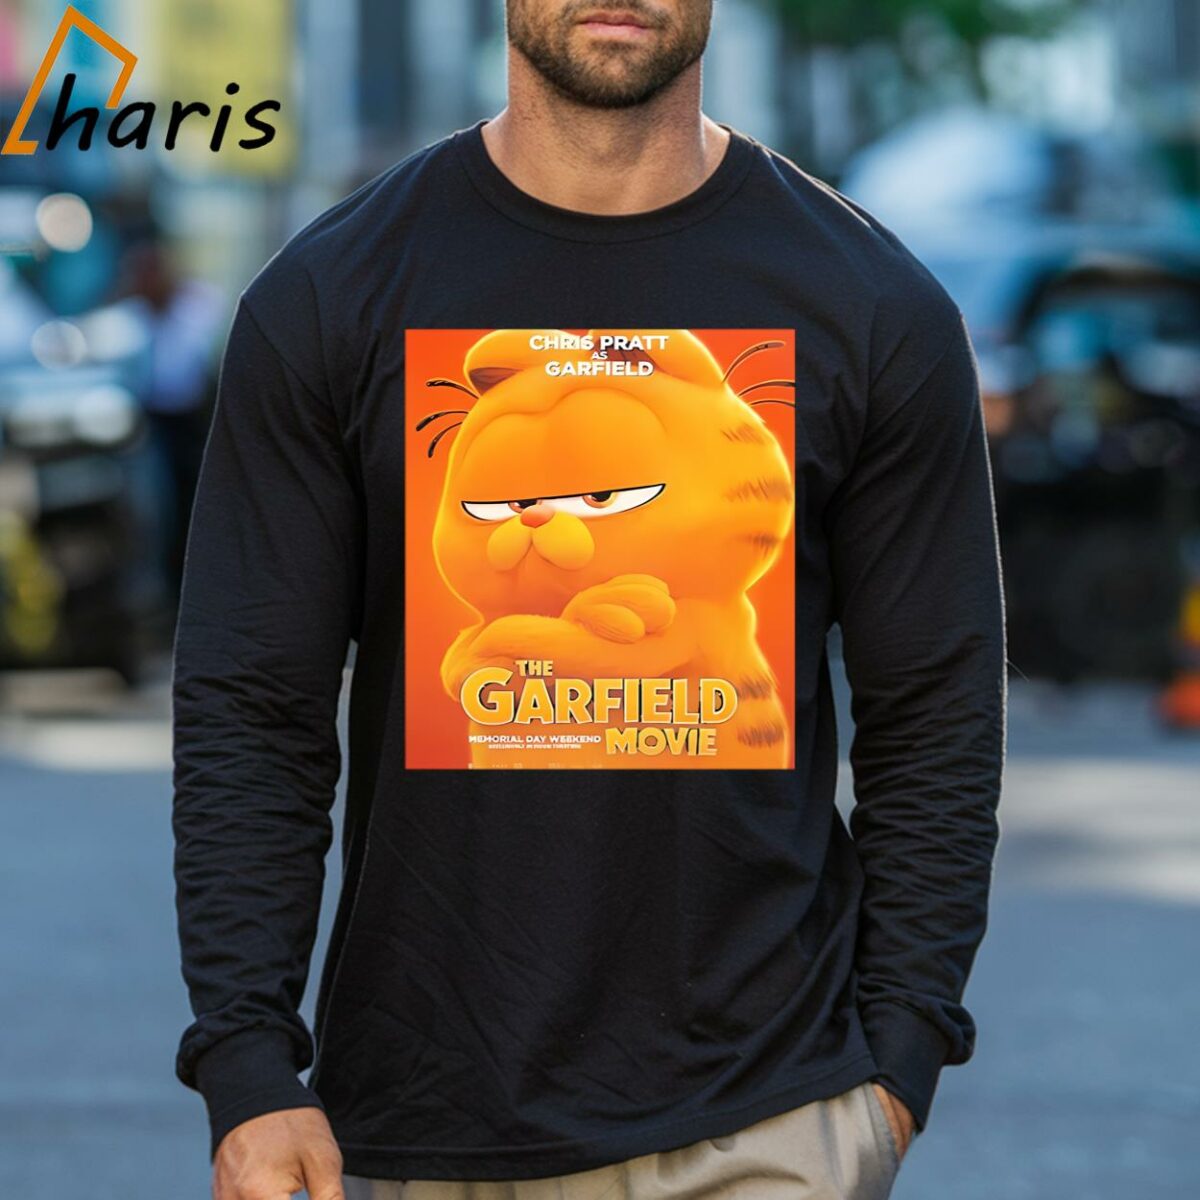 Chris Pratt As Garfield In The Garfield Movie Shirt 3 Long sleeve shirt